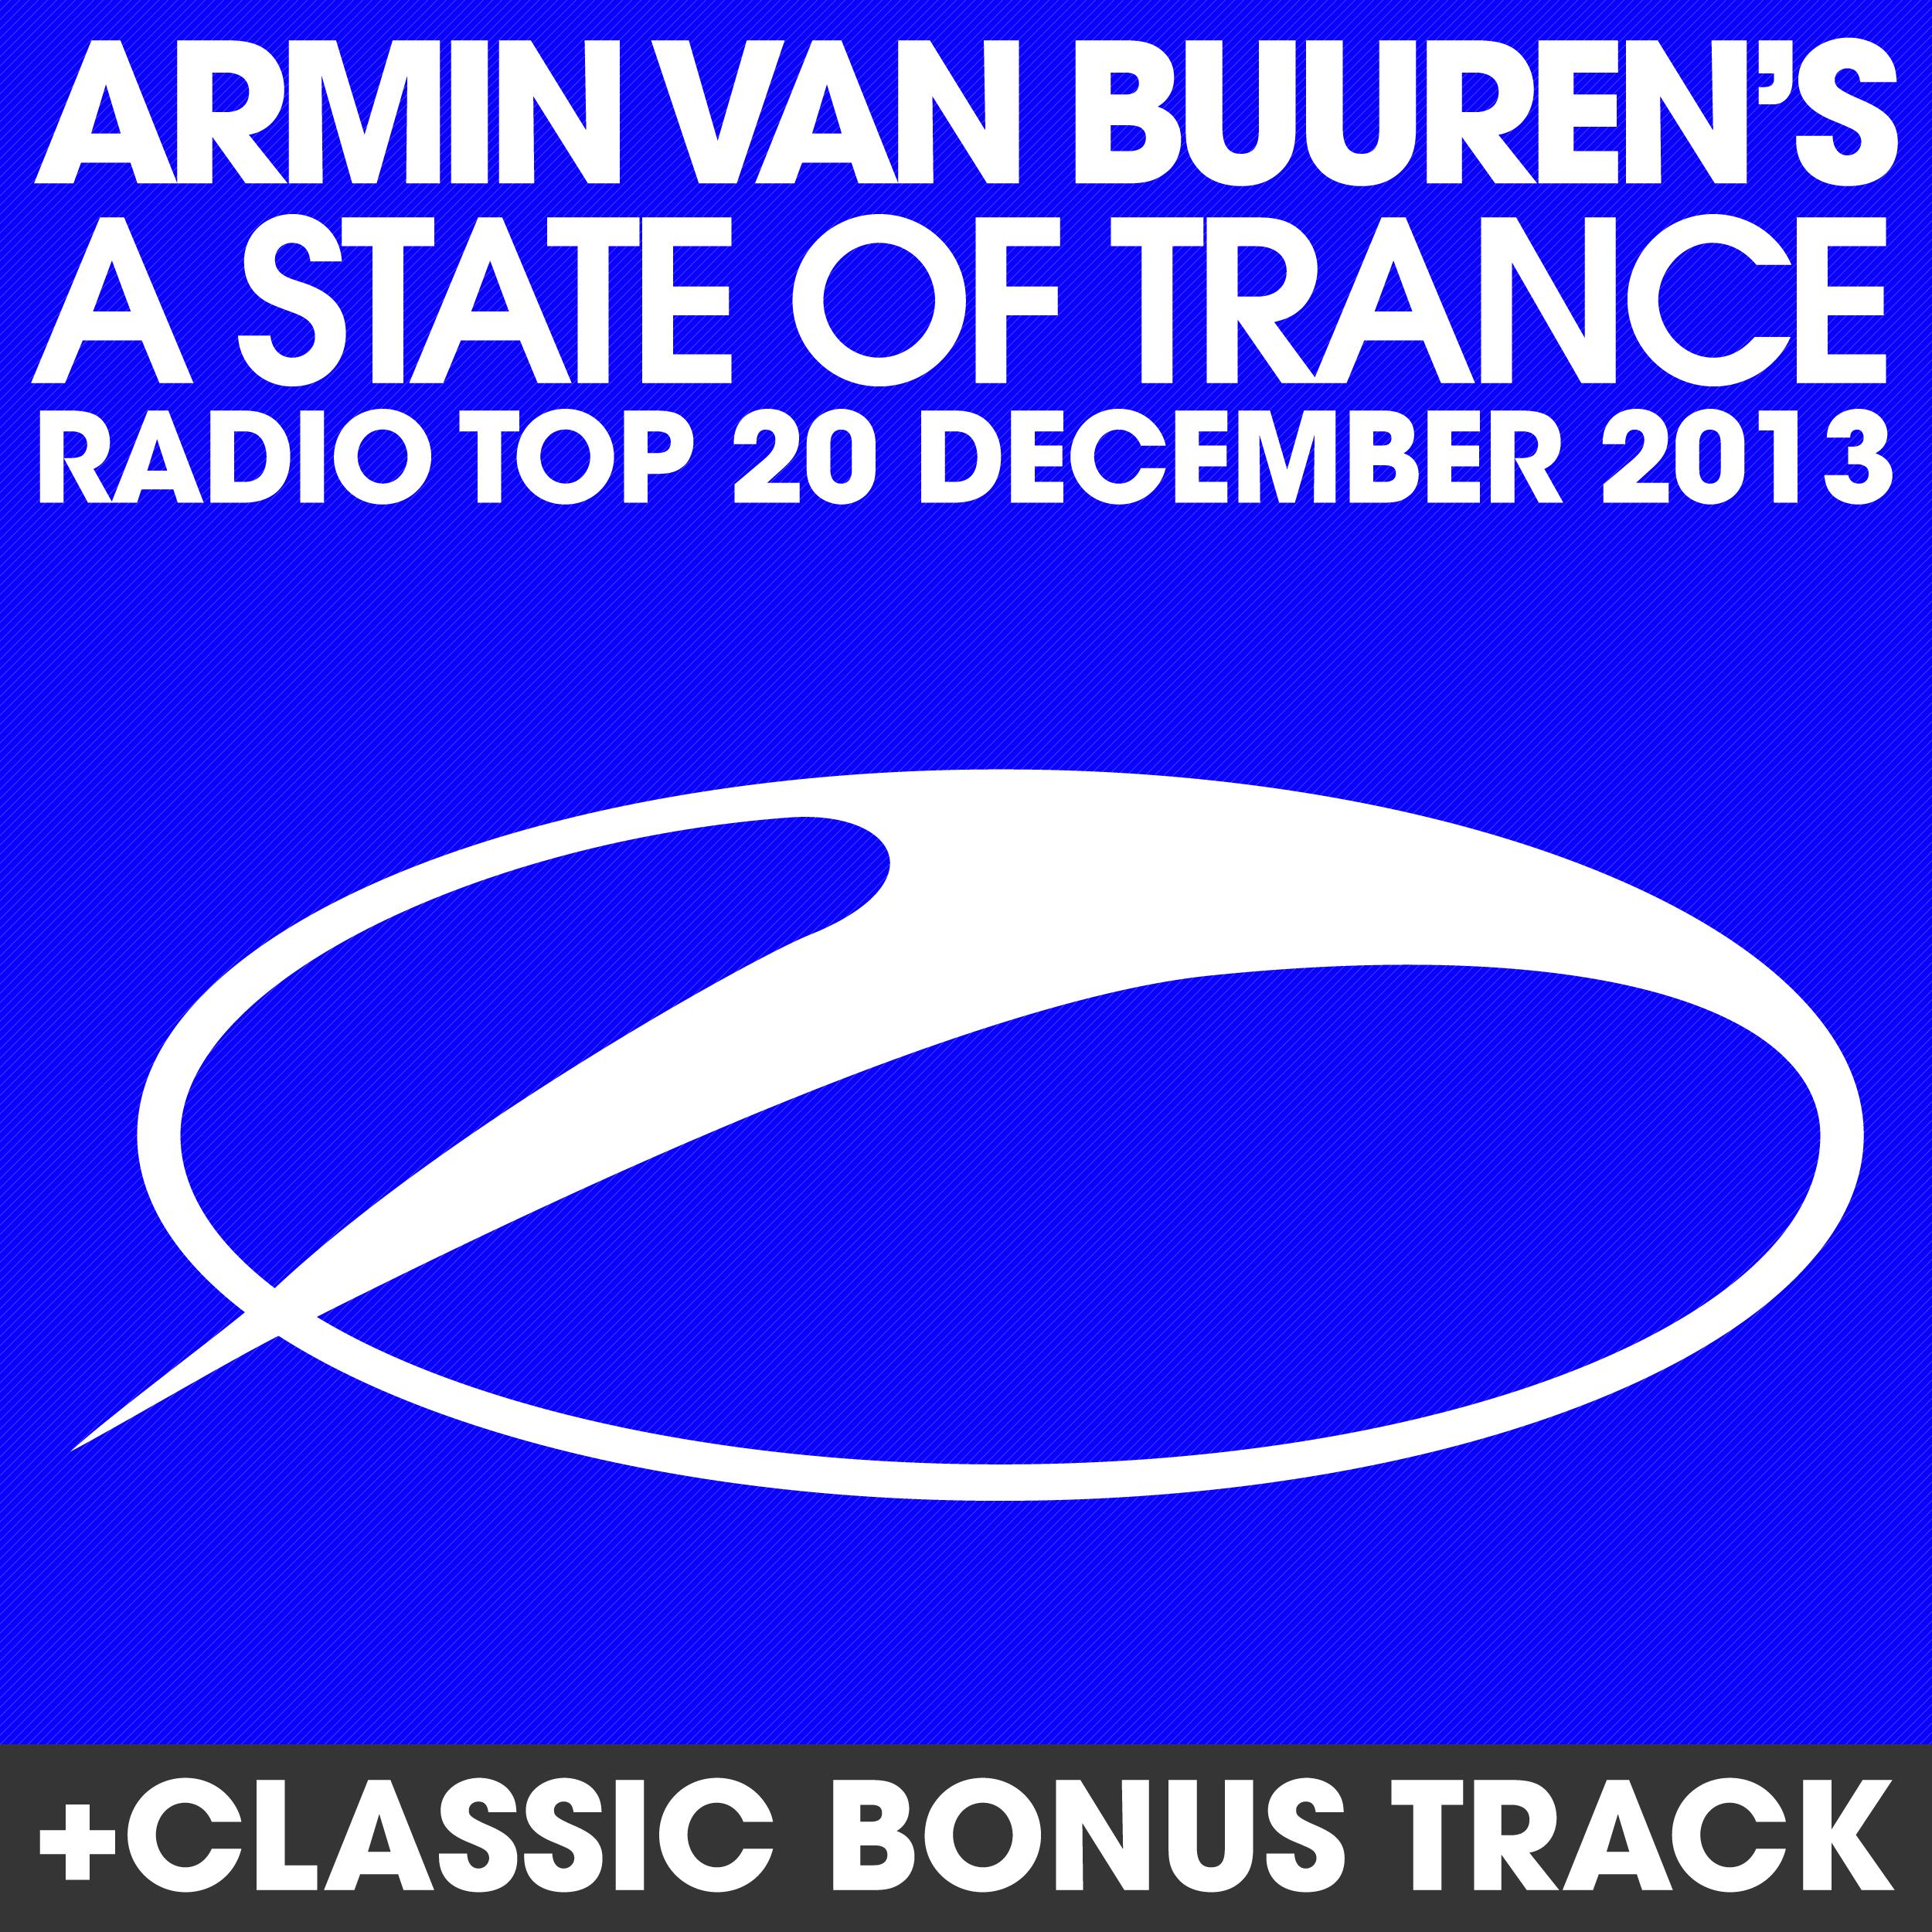 A State Of Trance Radio Top 20 - December 2013 (Including Classic Bonus Track)专辑